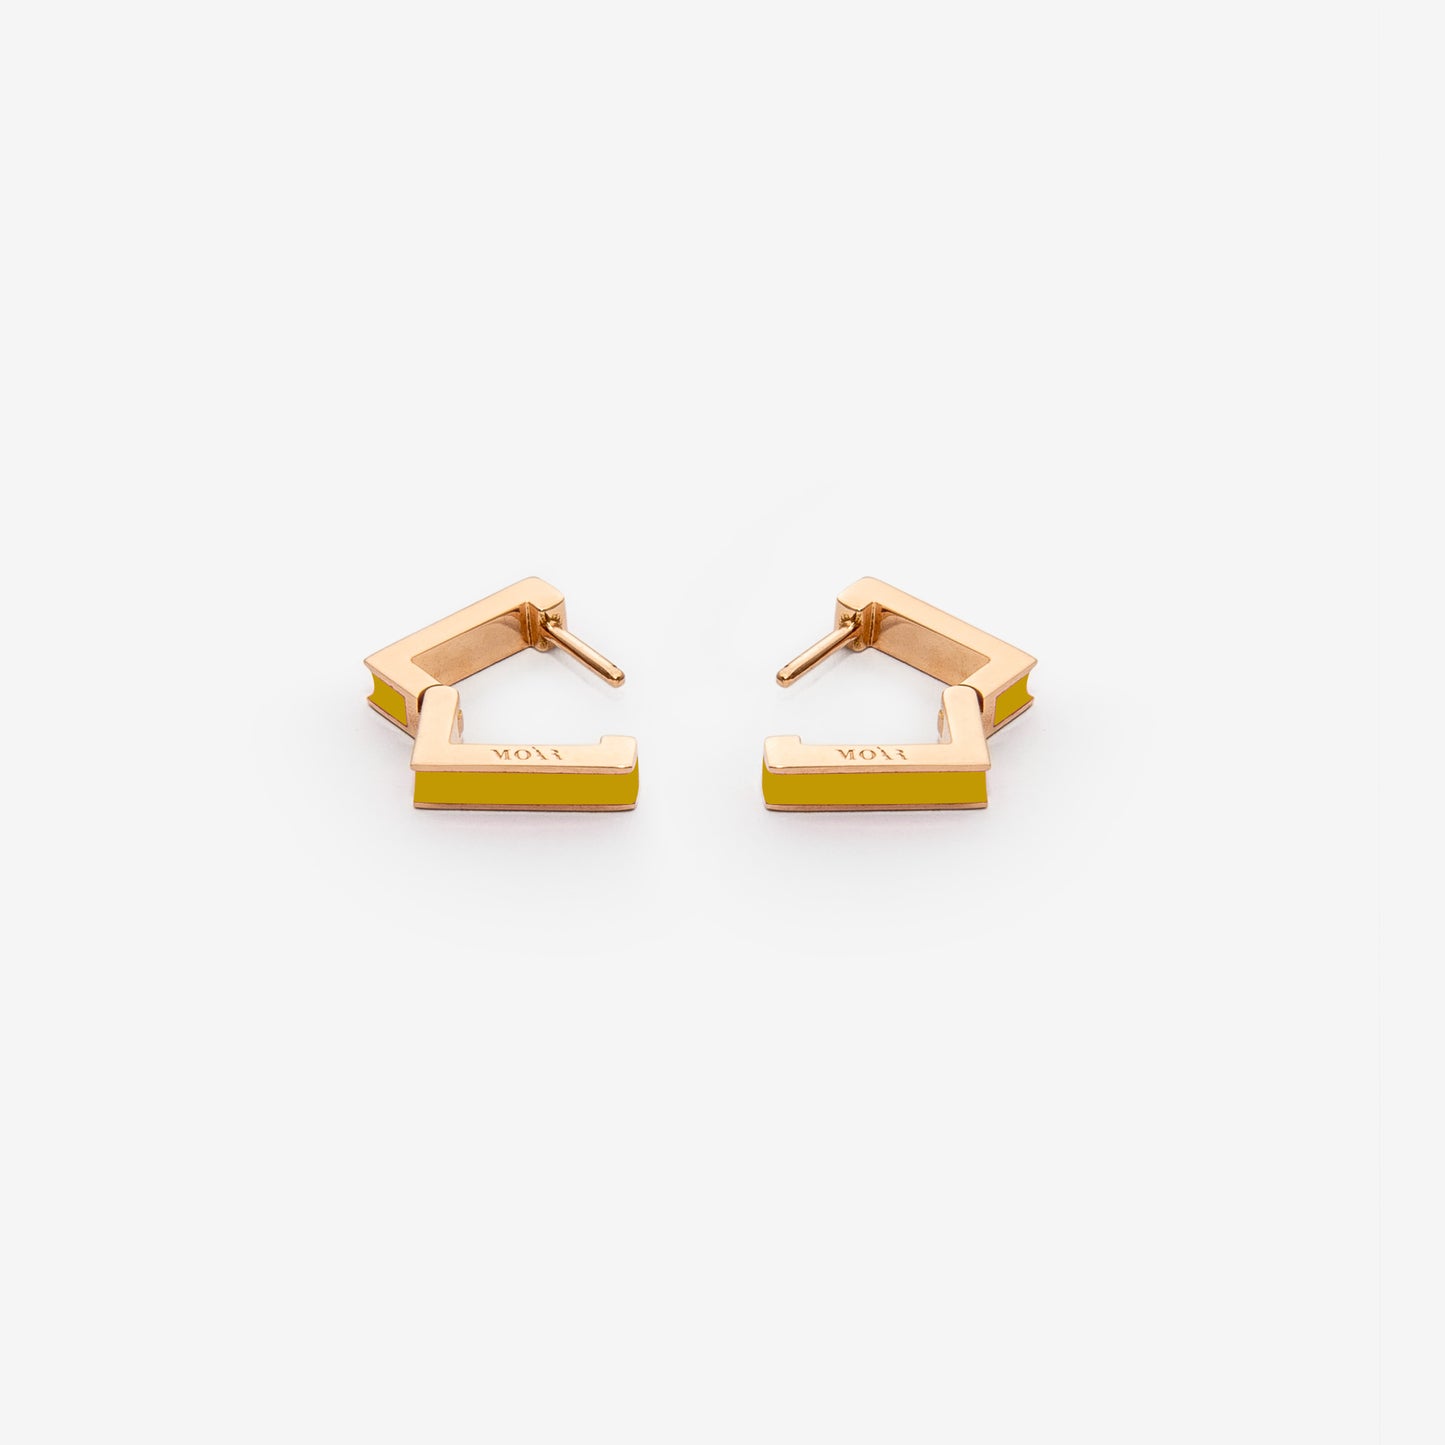 Square mustard earrings